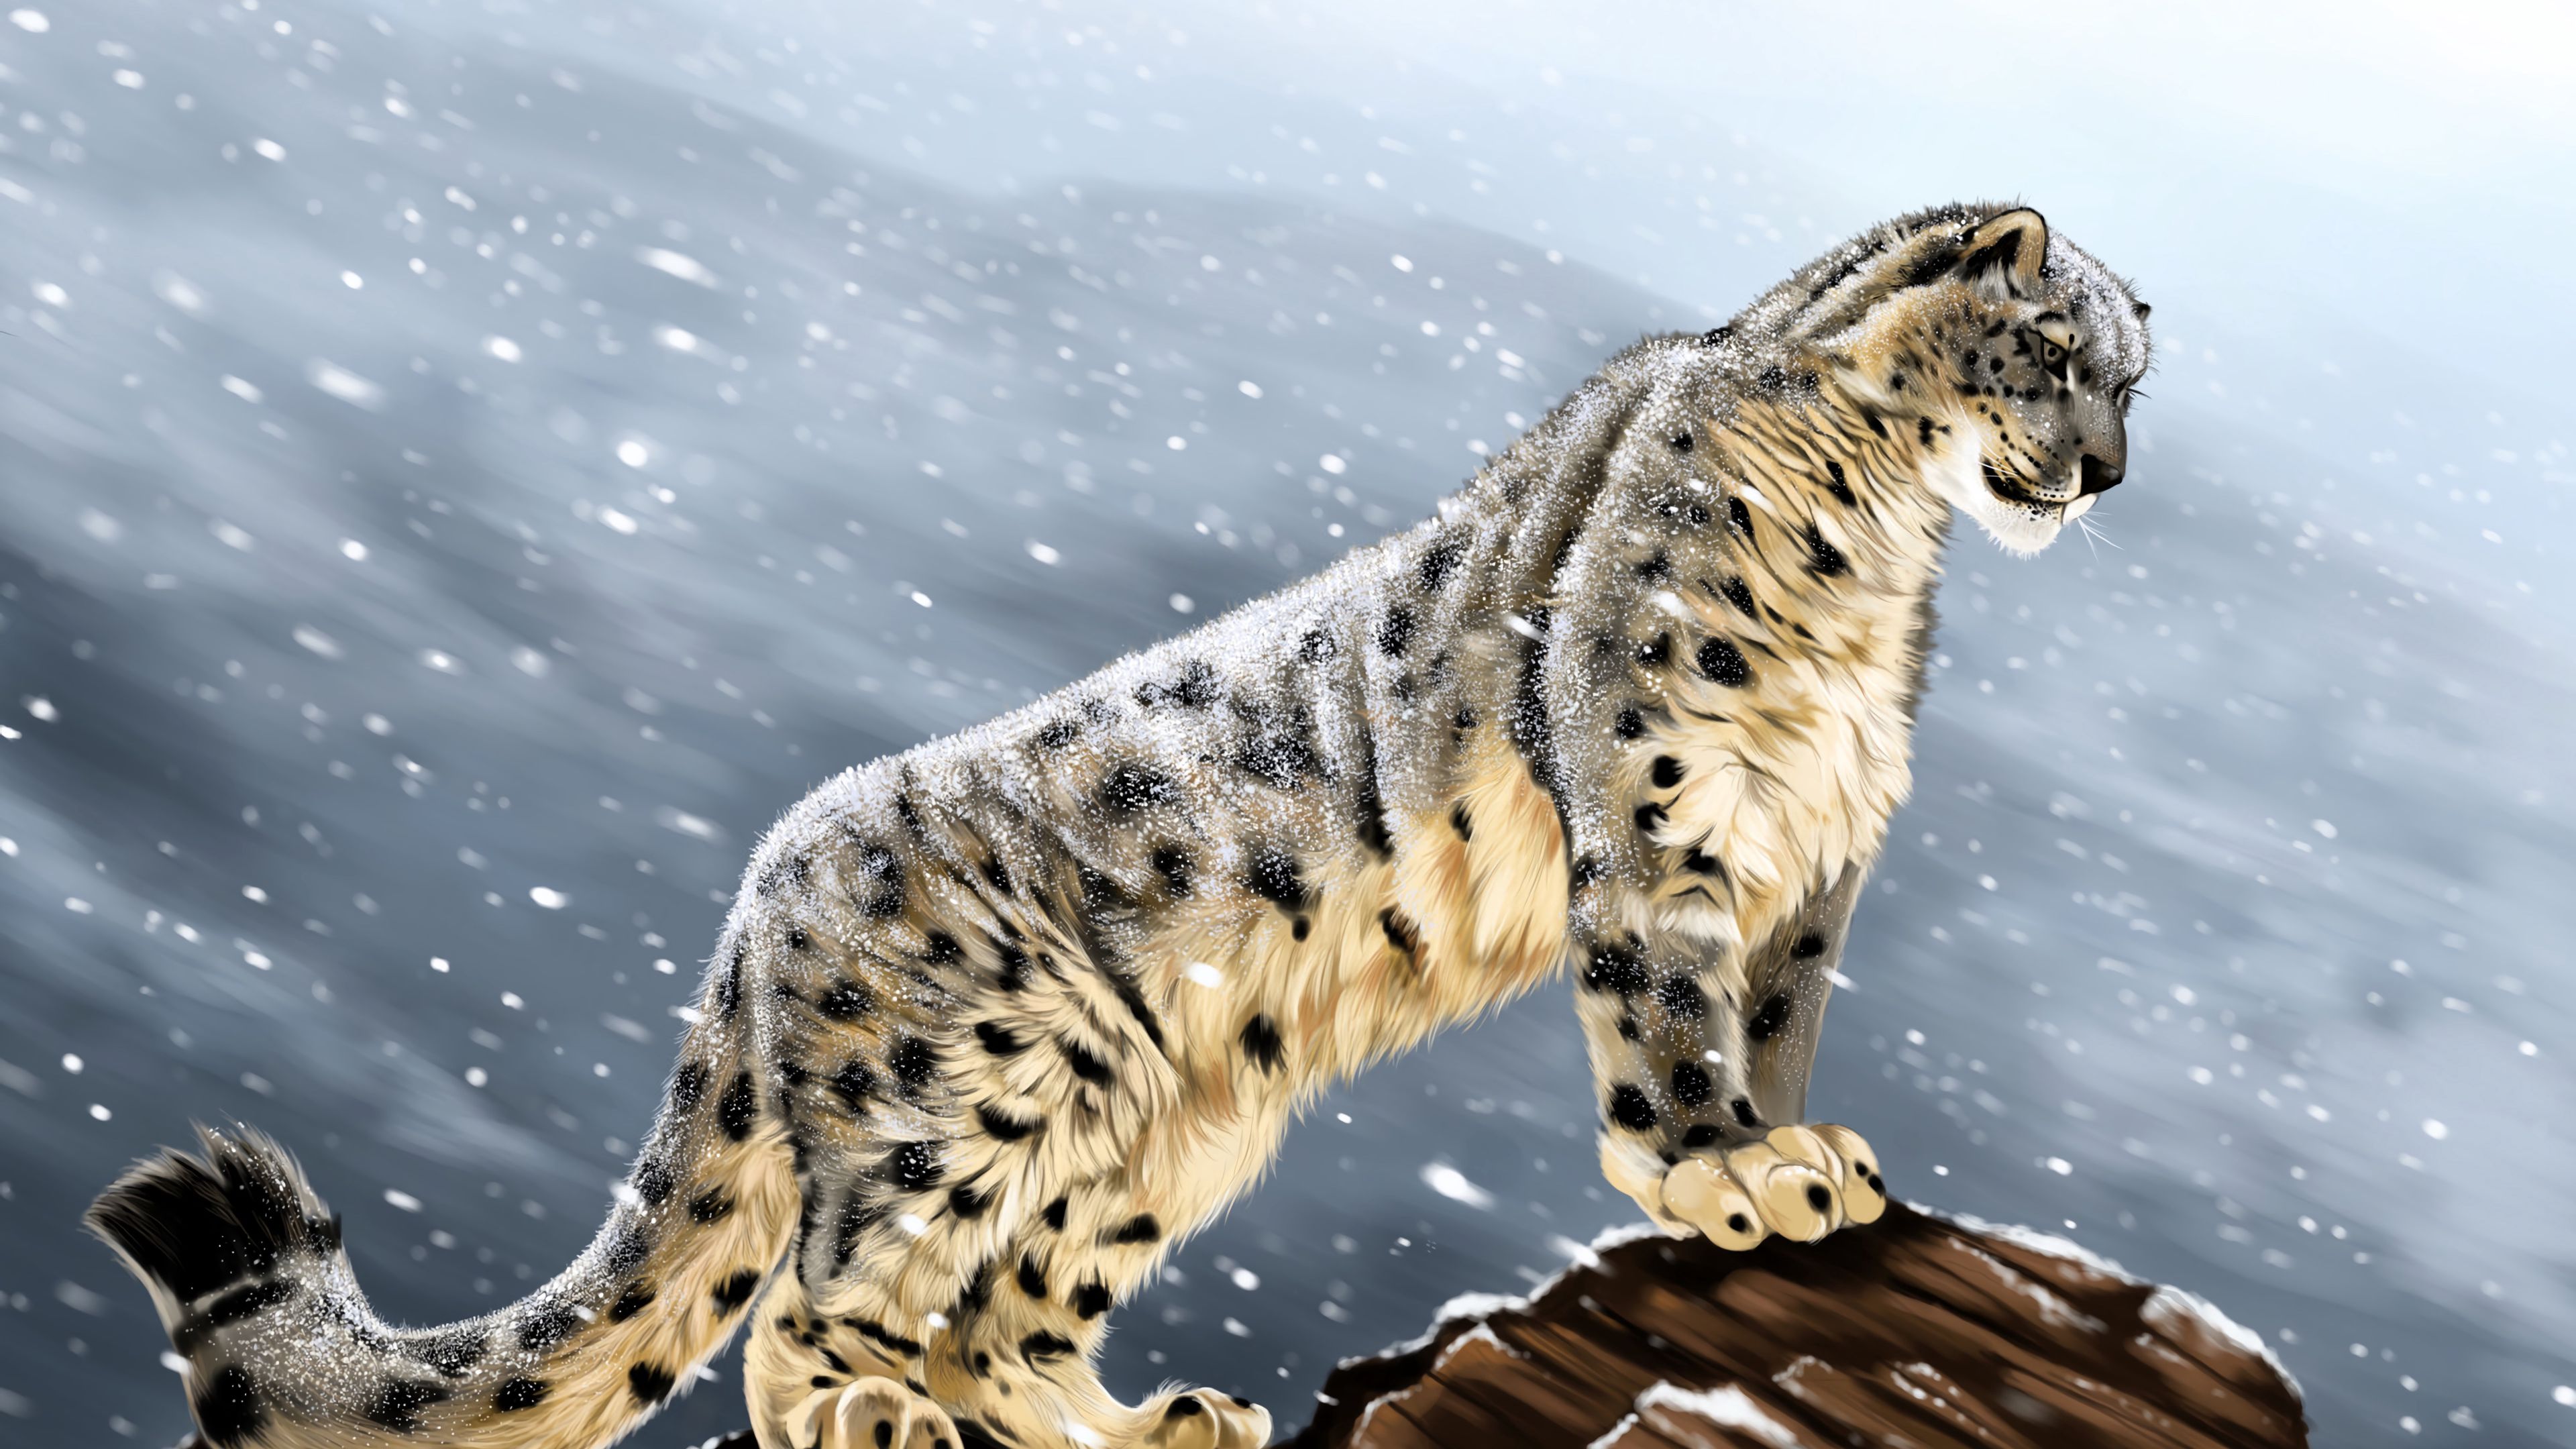 Download wallpaper 3840x2160 snow leopard, big cat, predator, glance,  stones, art 4k uhd 16:9 hd background